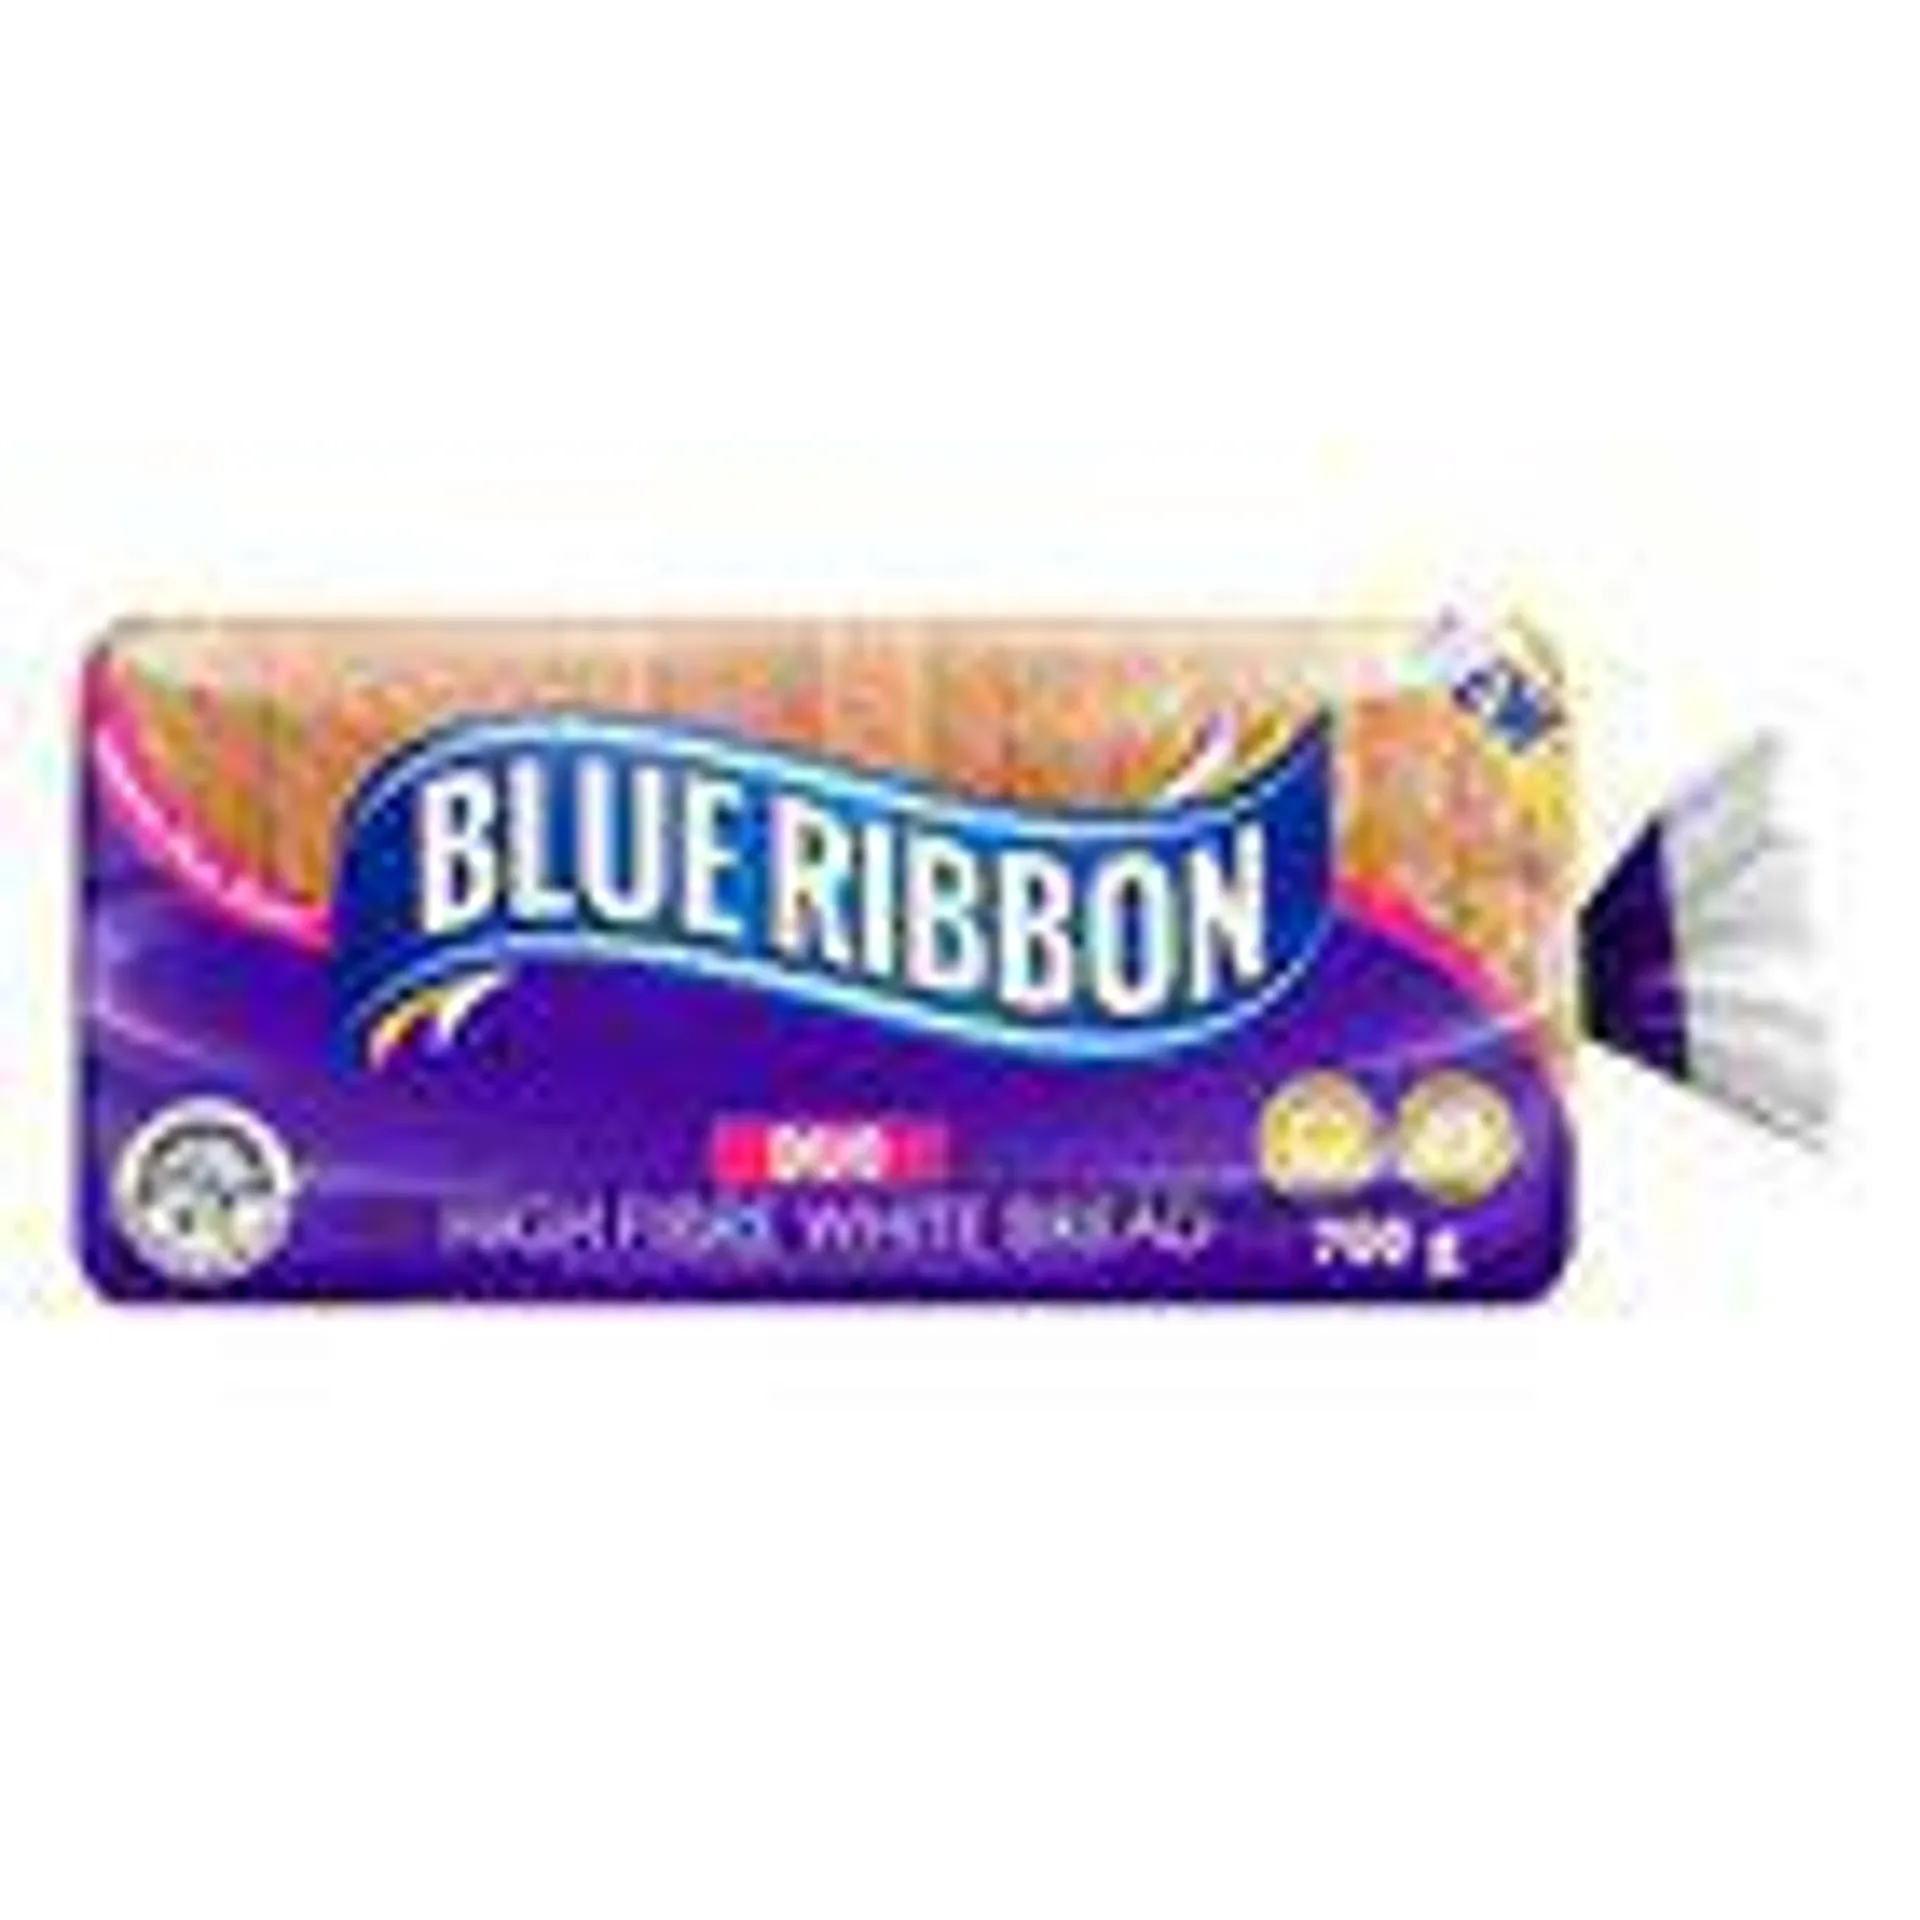 Blue Ribbon Duo Bread 700g